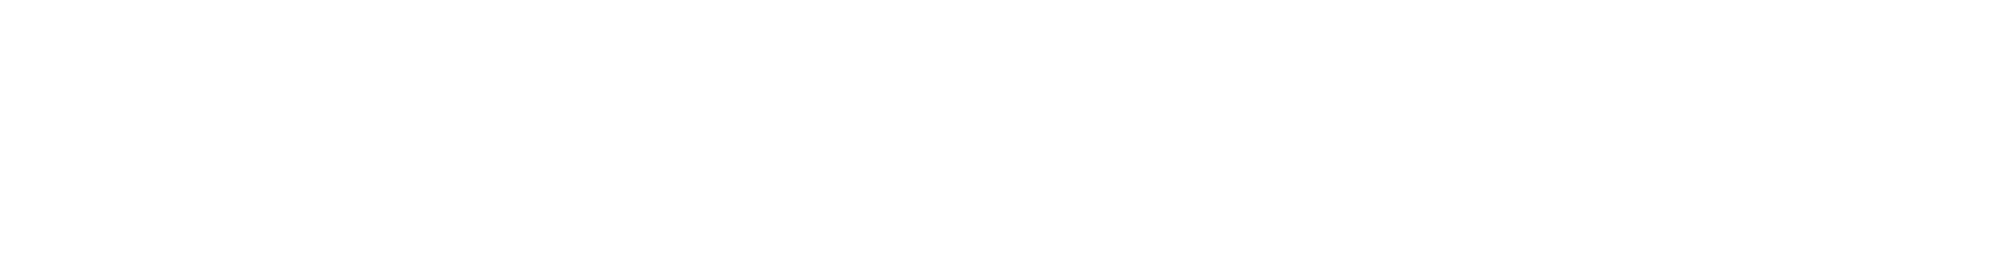 Placeoftechnet logo